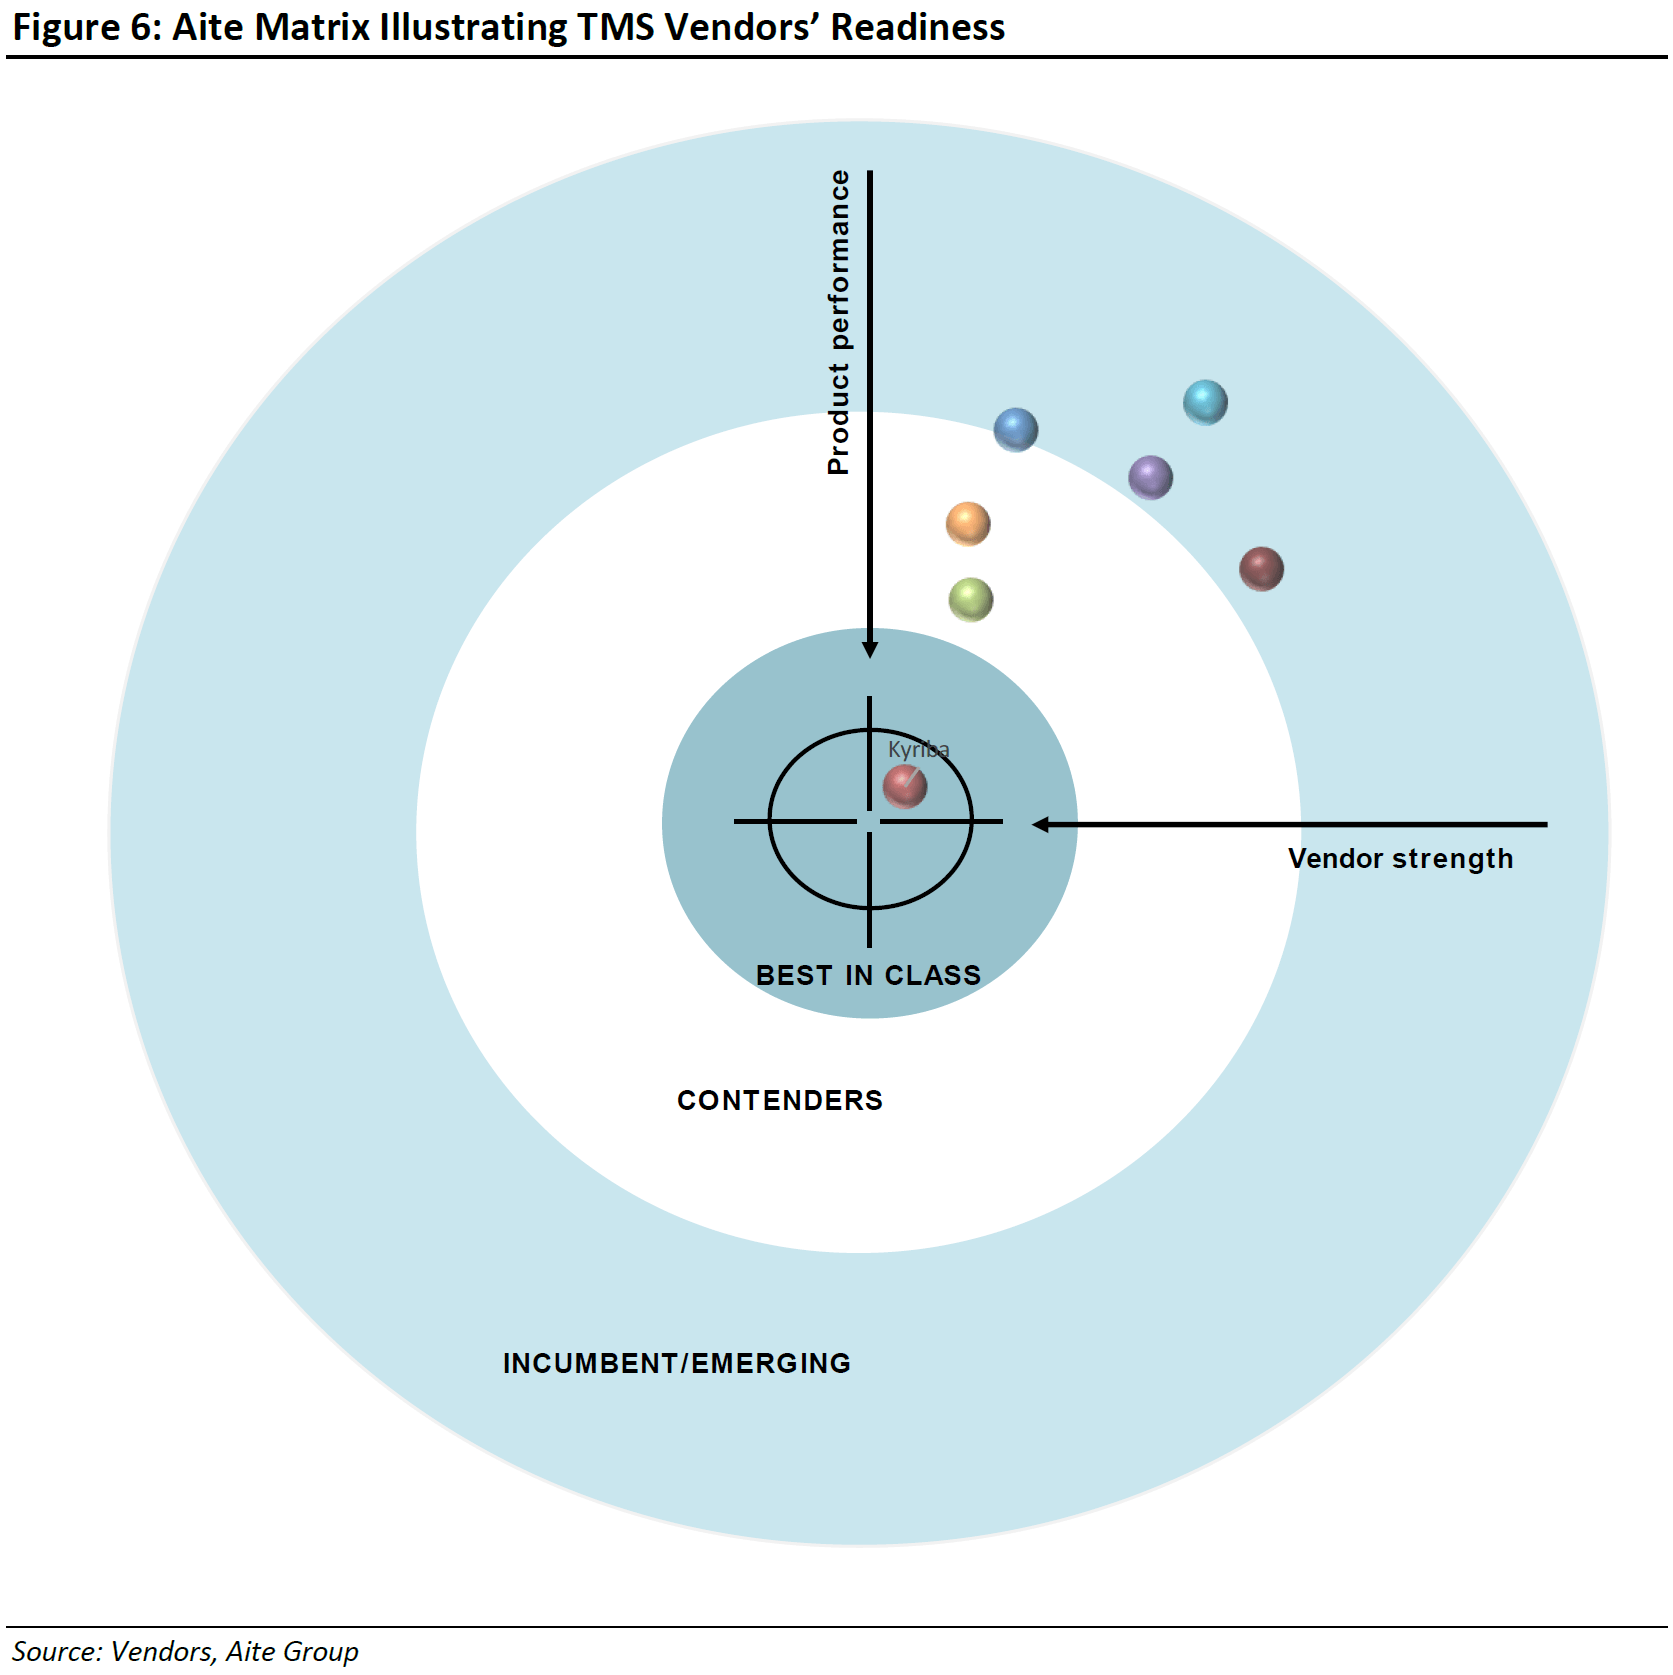 Aite Evaluation Report - Figure 6: Aite Matrix Illustrating Vendors' Readiness of top corporate treasury management systems